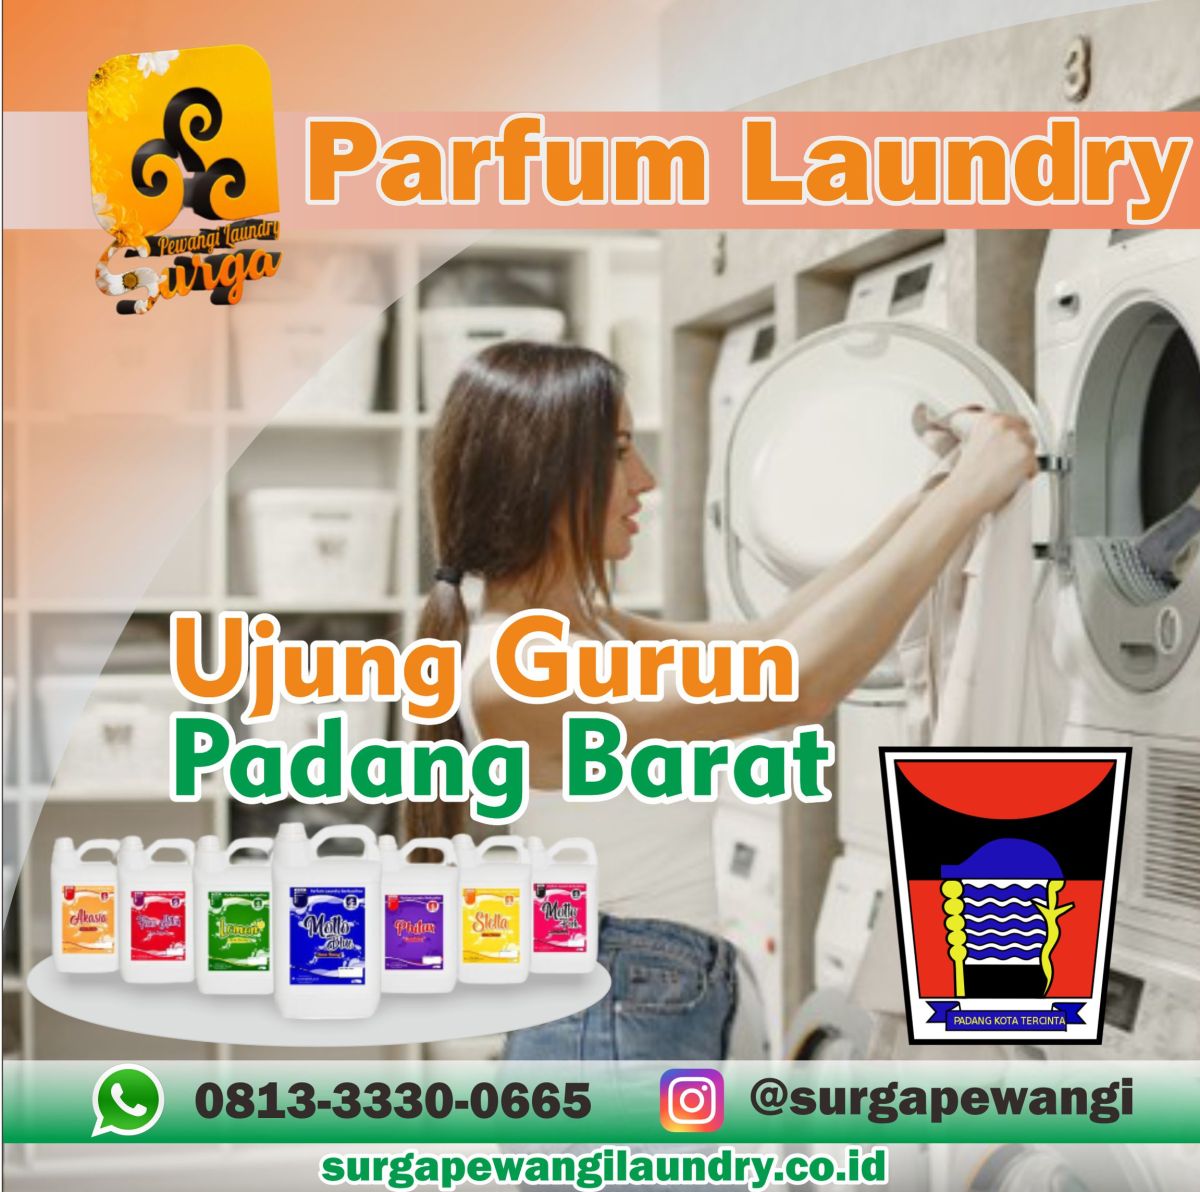 Parfum Laundry Ujung Gurun, Padang Barat